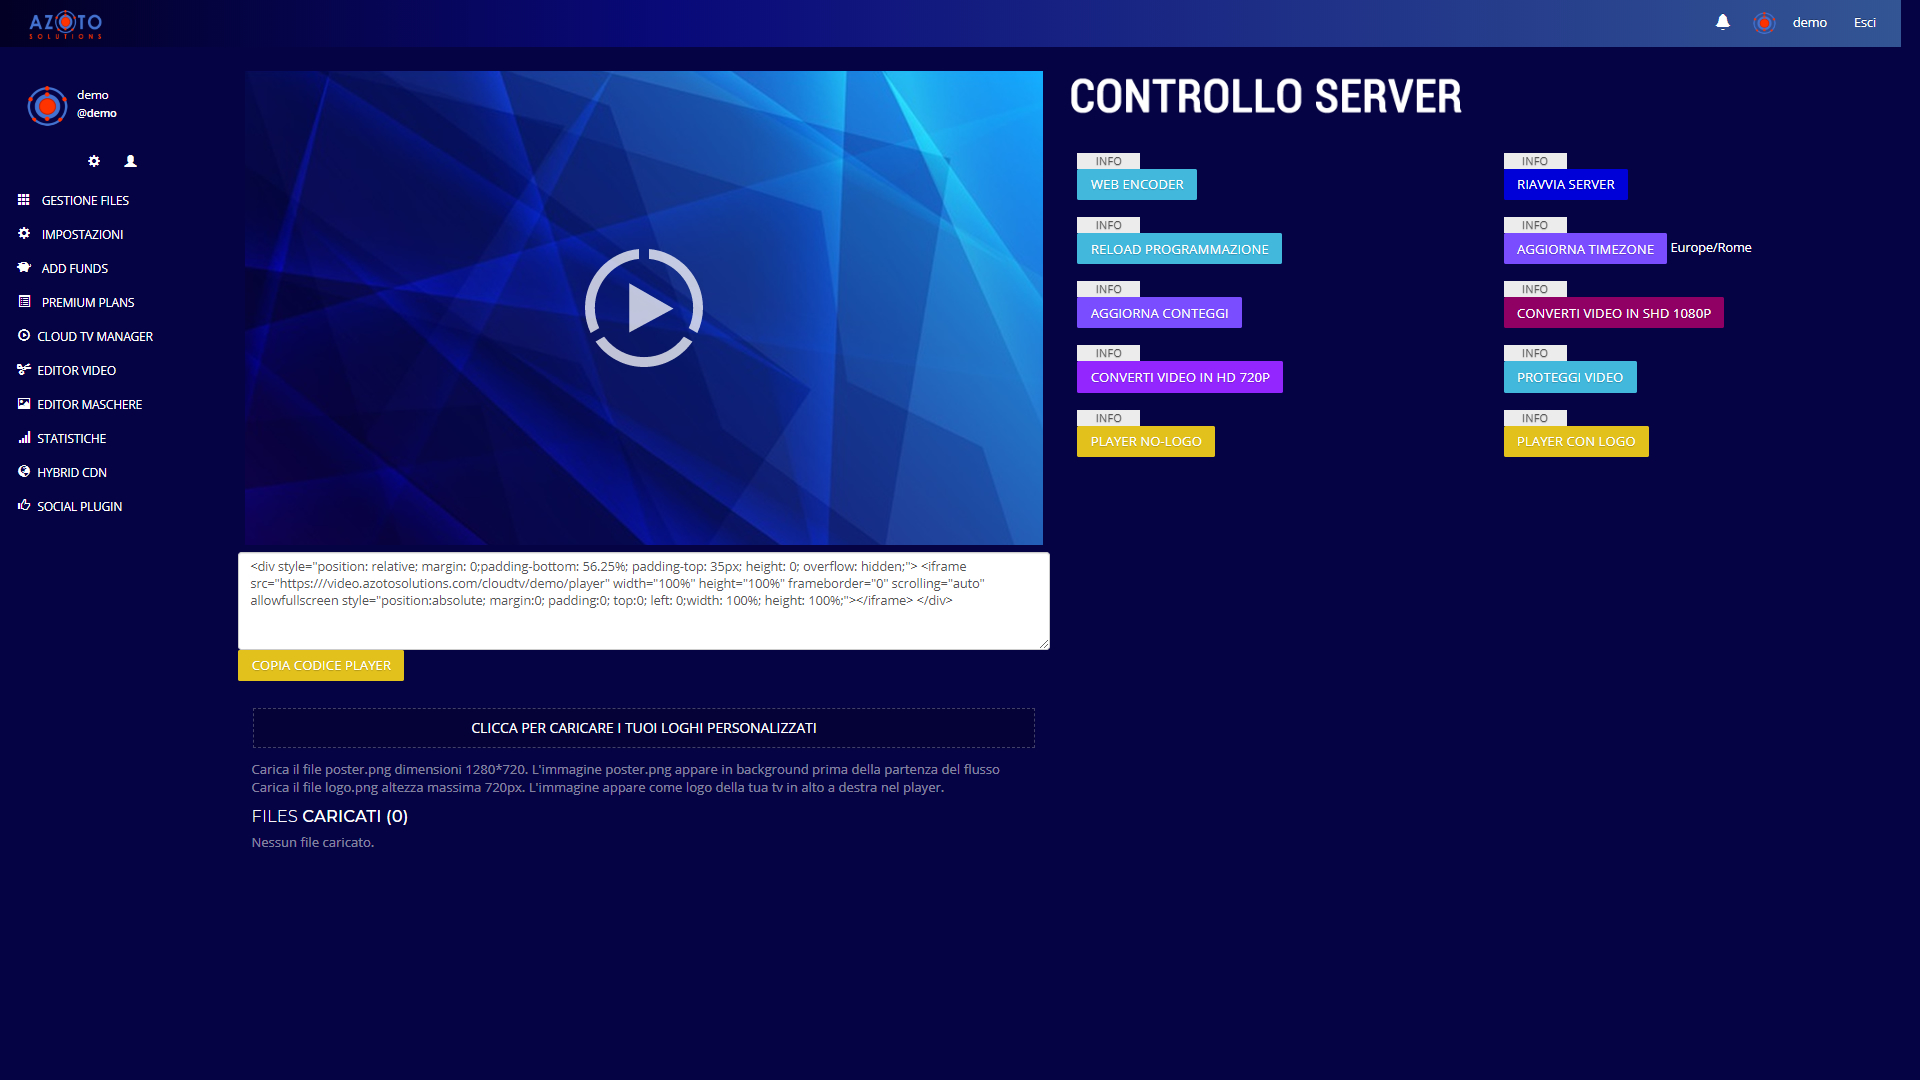 Cloud TV - Video Streaming - Server Video Streaming - Playlist Scheduler - Web TV Server Video